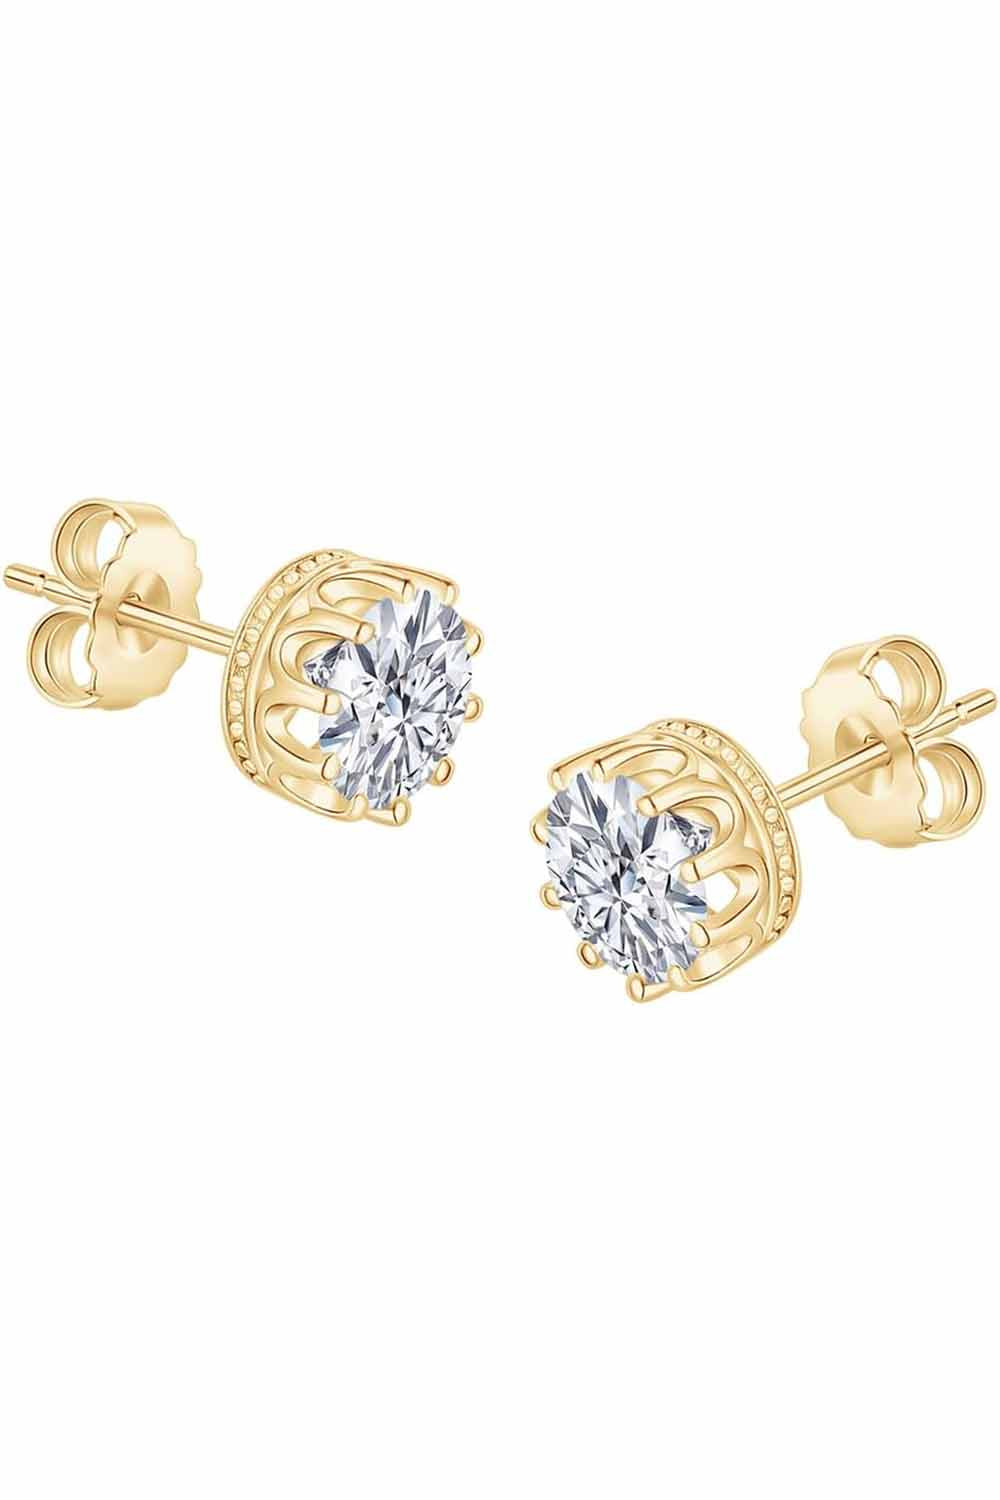 Yellow Gold Color Crown Stud Earrings, Stud Earrings for Women 